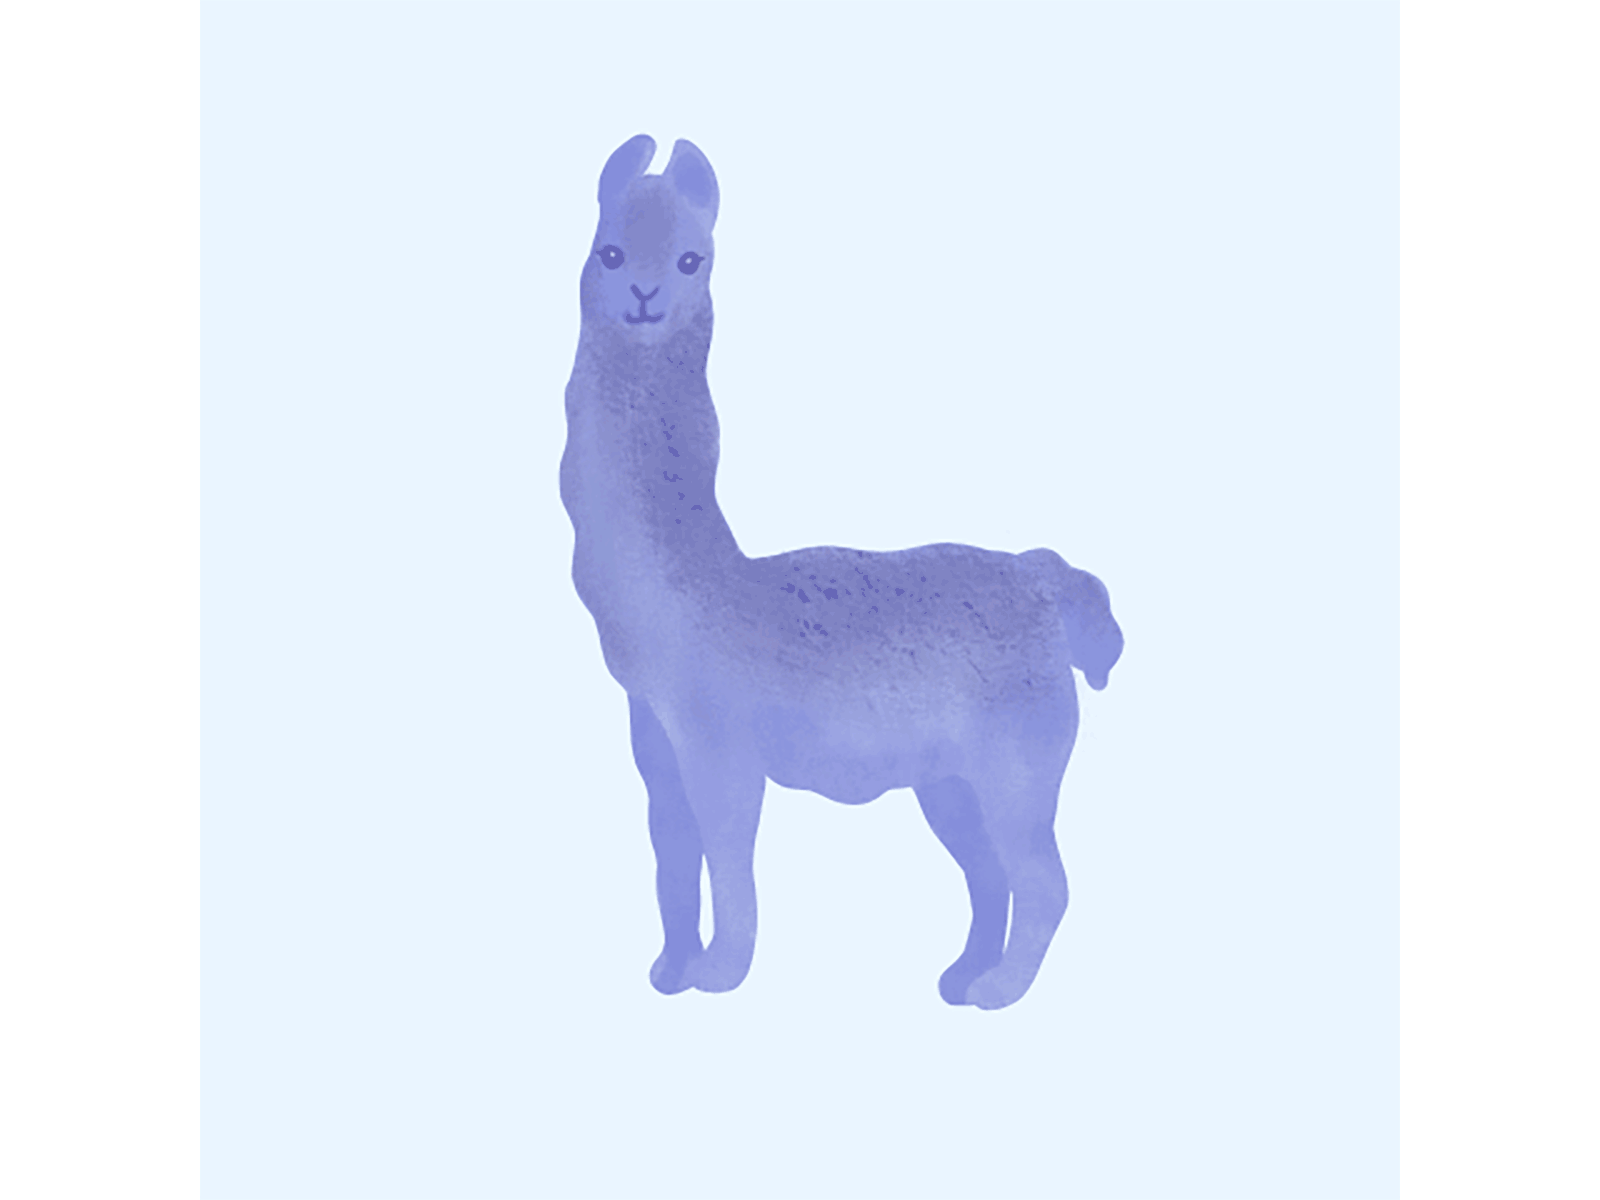 L is for Llama alphabet animation design frame by frame illustration illustration digital illustrations ipad lettering procreate